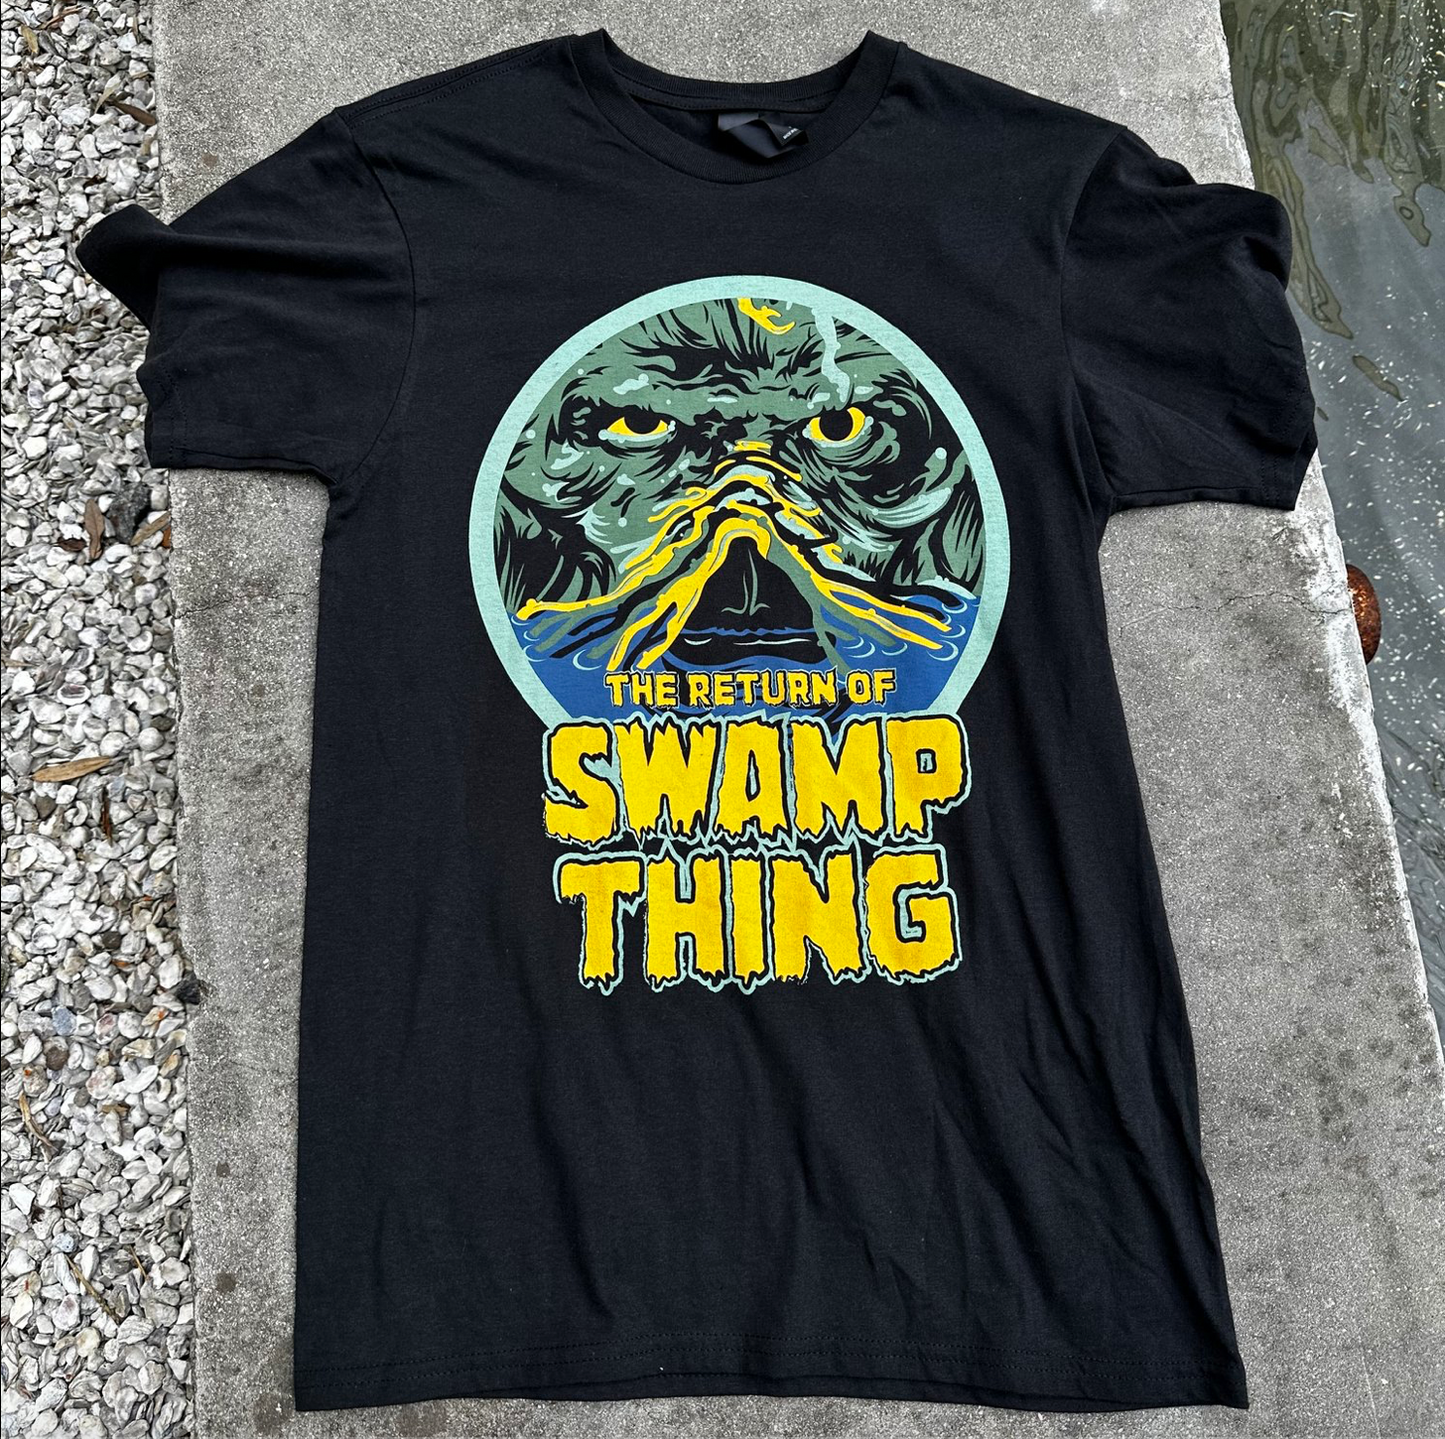 The Return of Swamp Thing Shirt